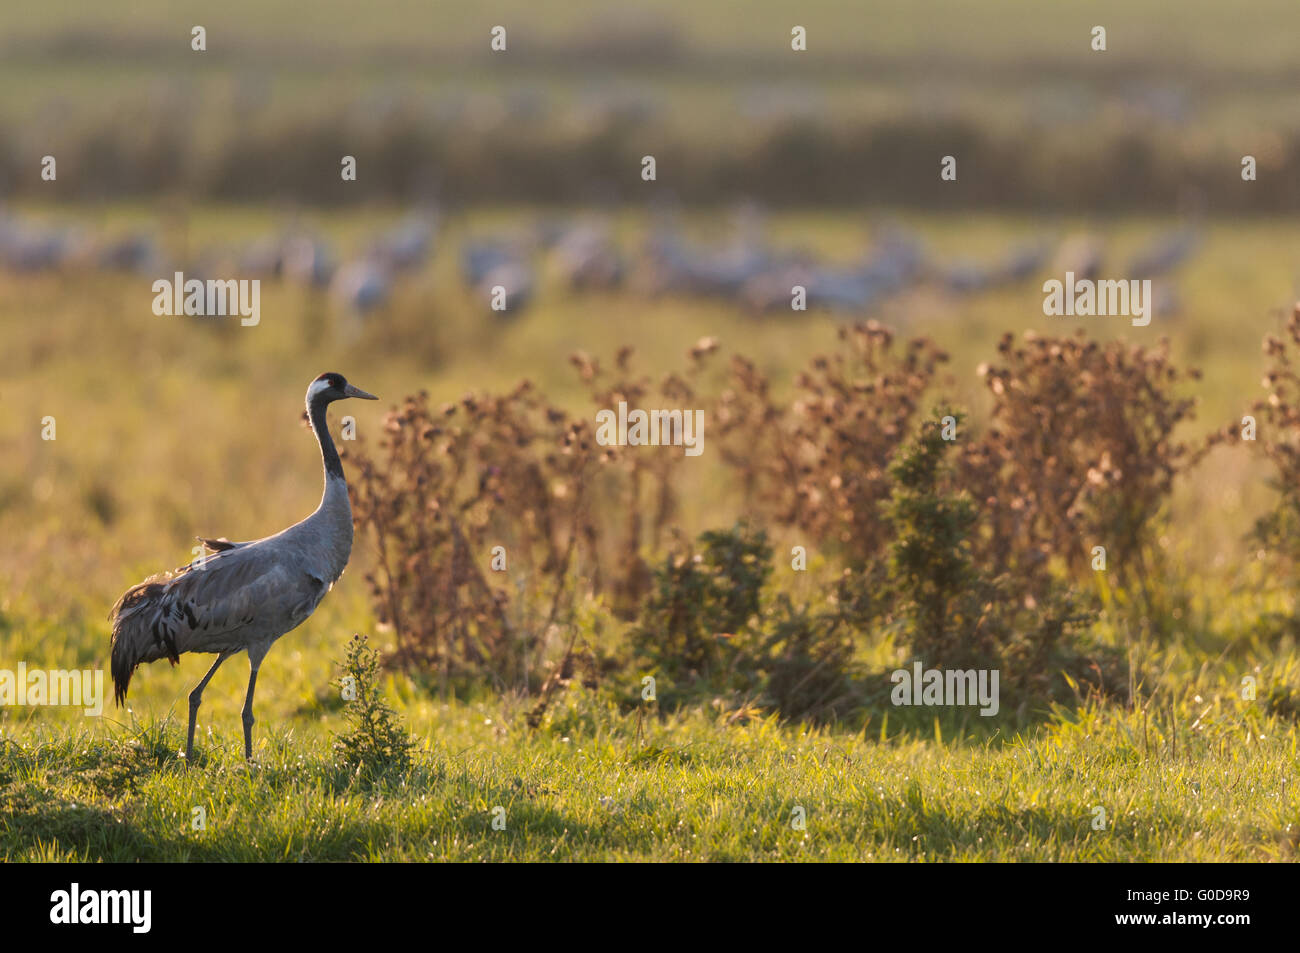 Common crane from Germany Stock Photo